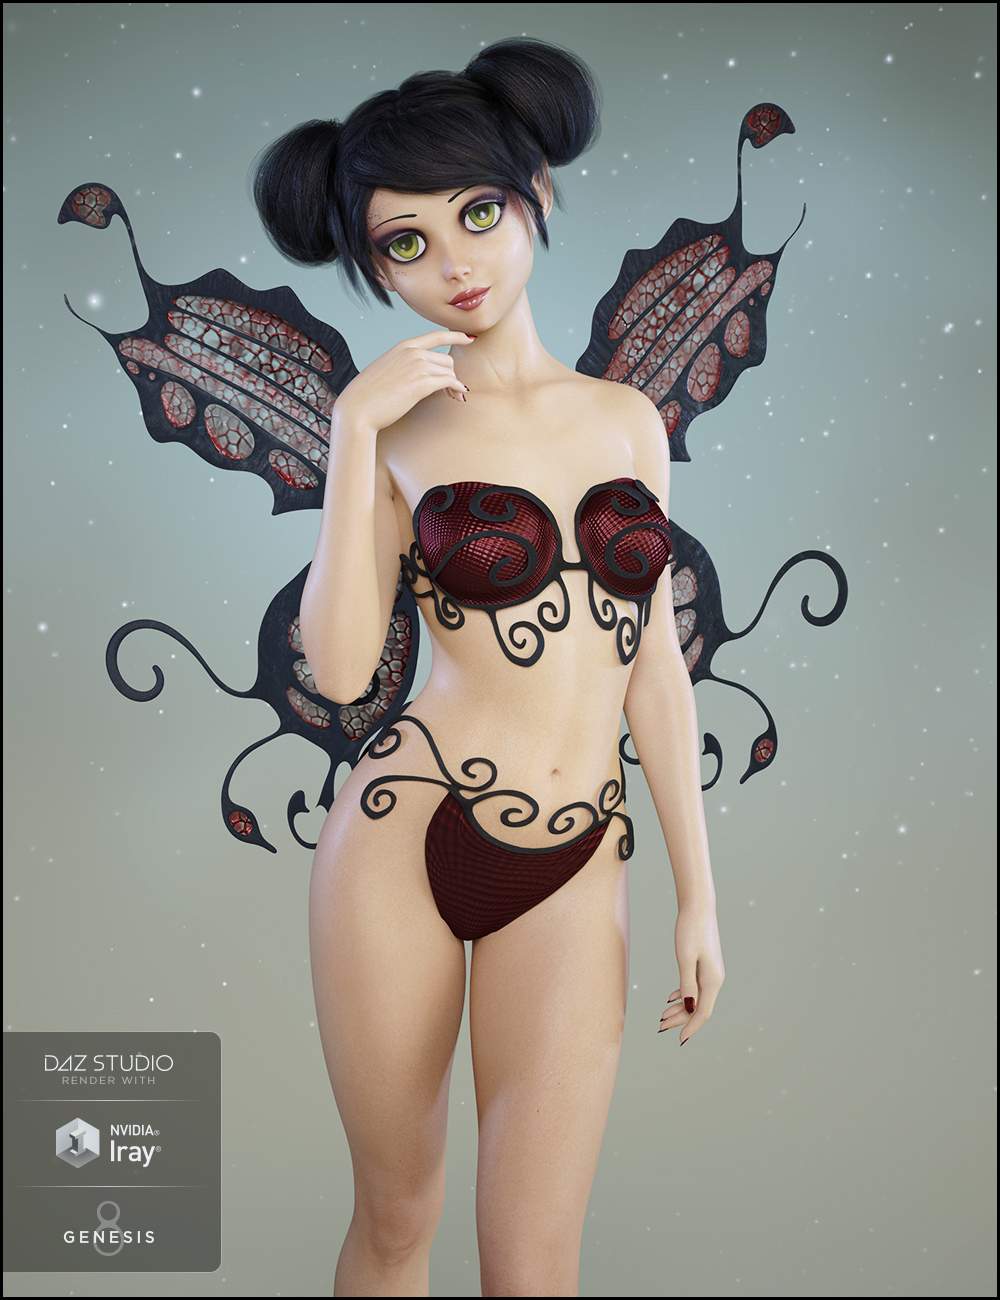 FeiFae Fairykini for Genesis 8 Female(s) by: DemonicaEviliusJessaiiTrickster3DX, 3D Models by Daz 3D